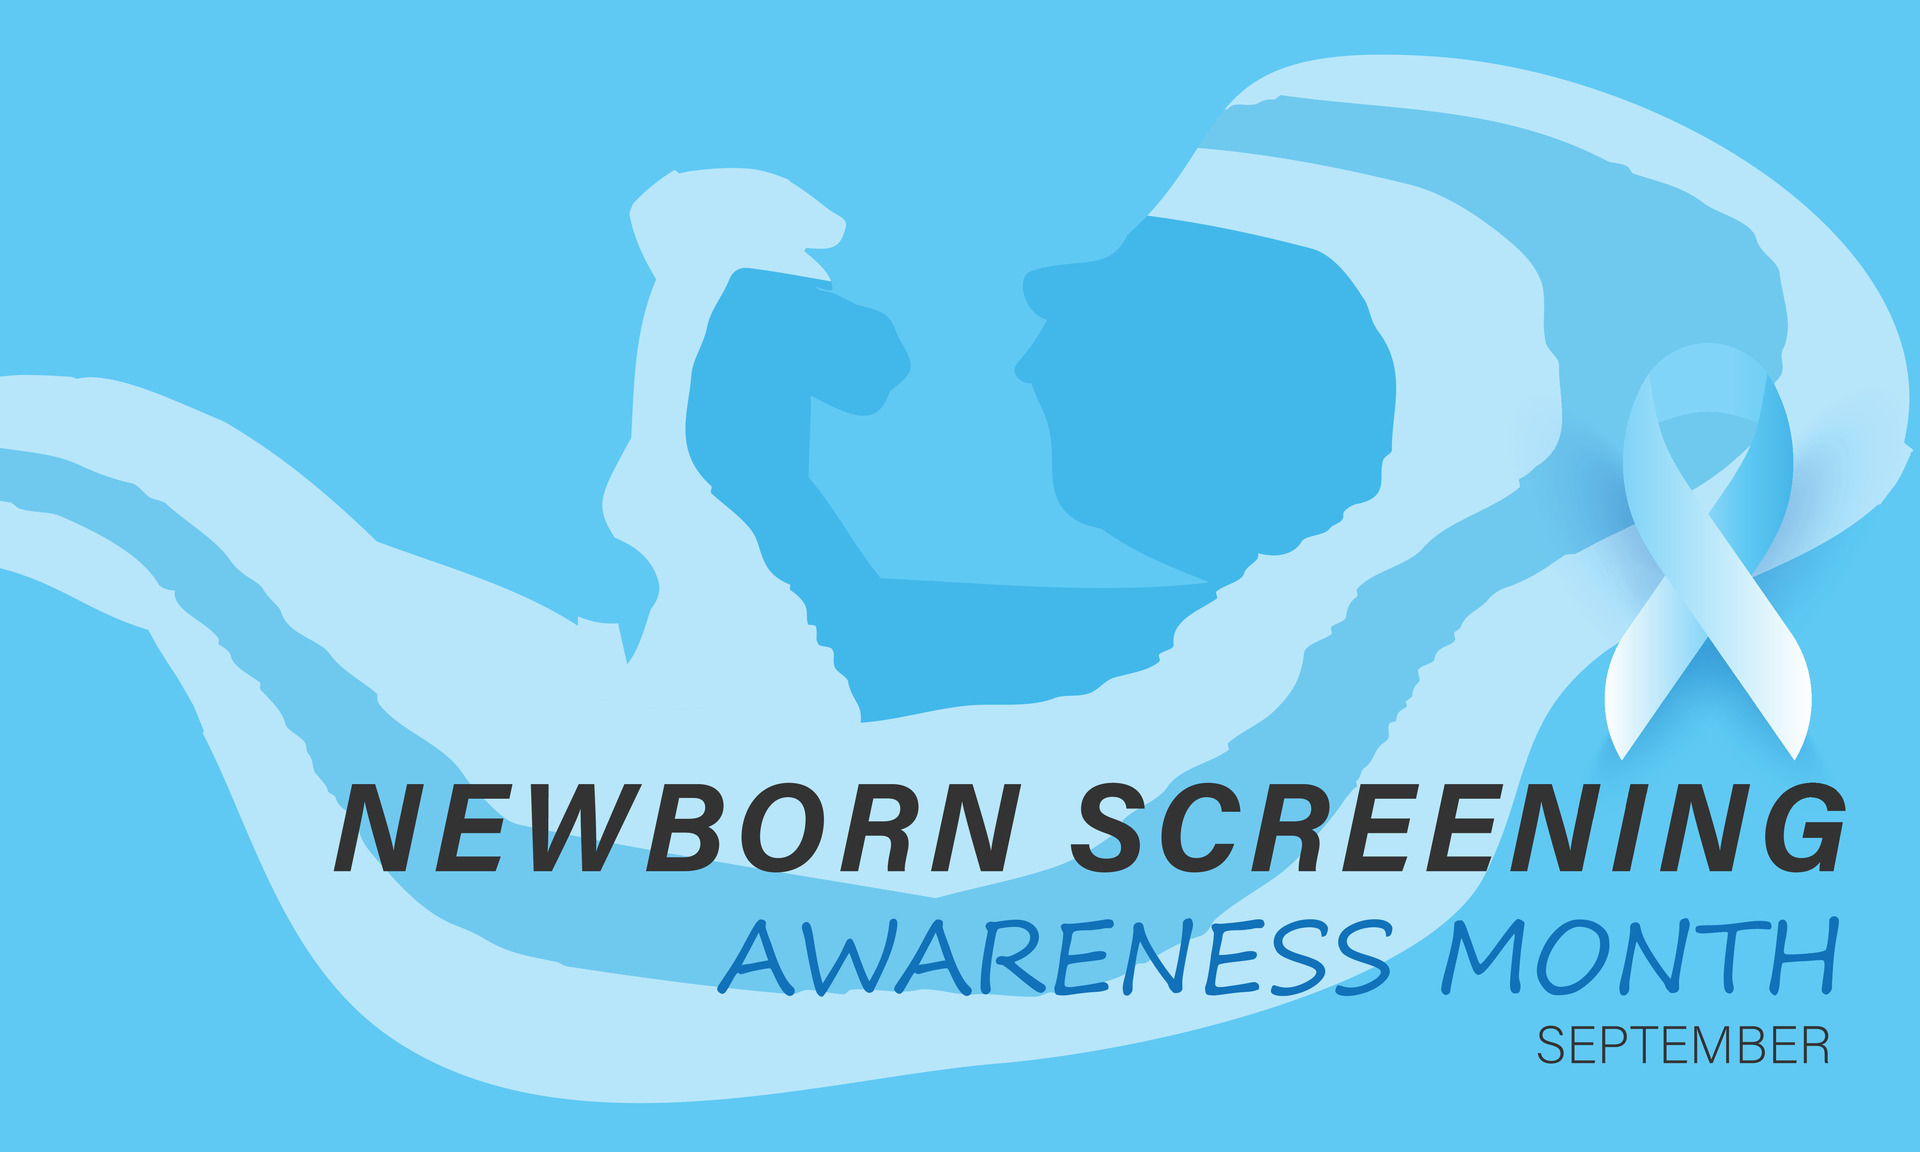 Newborn screening awareness month. background, banner, card, poster